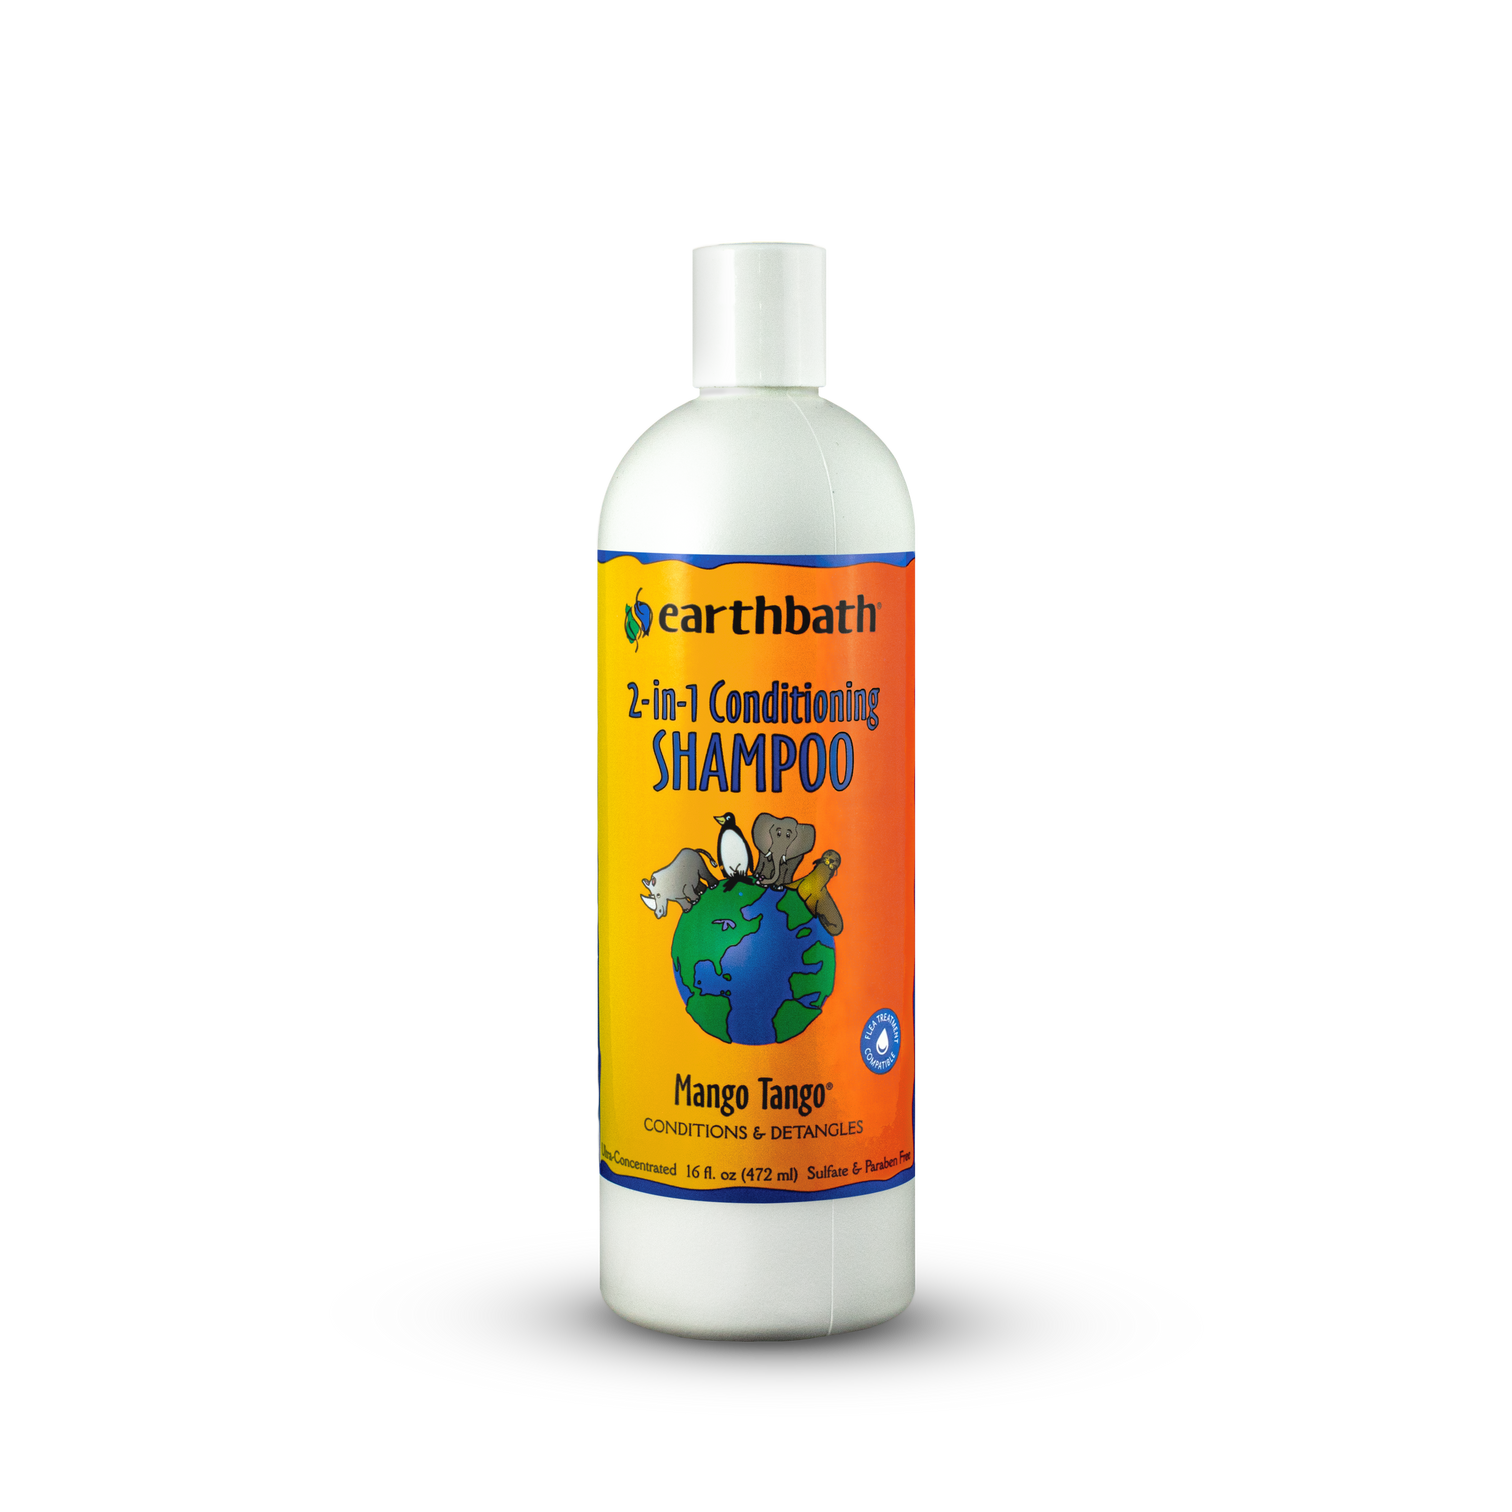 Earthbath 2-in-1 Conditioning Shampoo Mango Tango 16oz